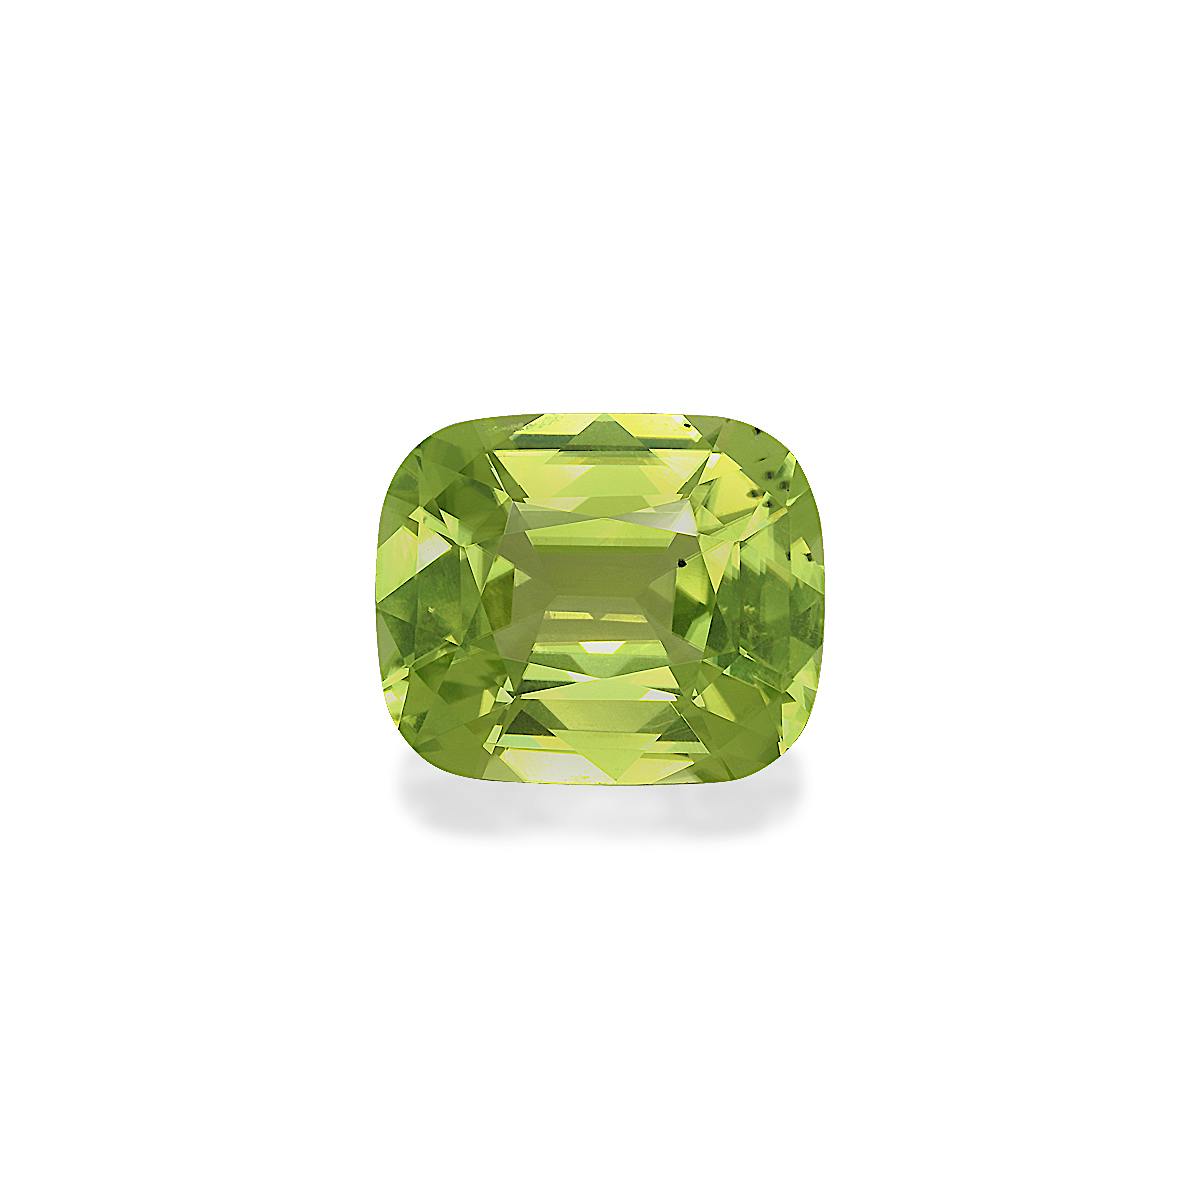 Green Peridot 4.59ct - Main Image